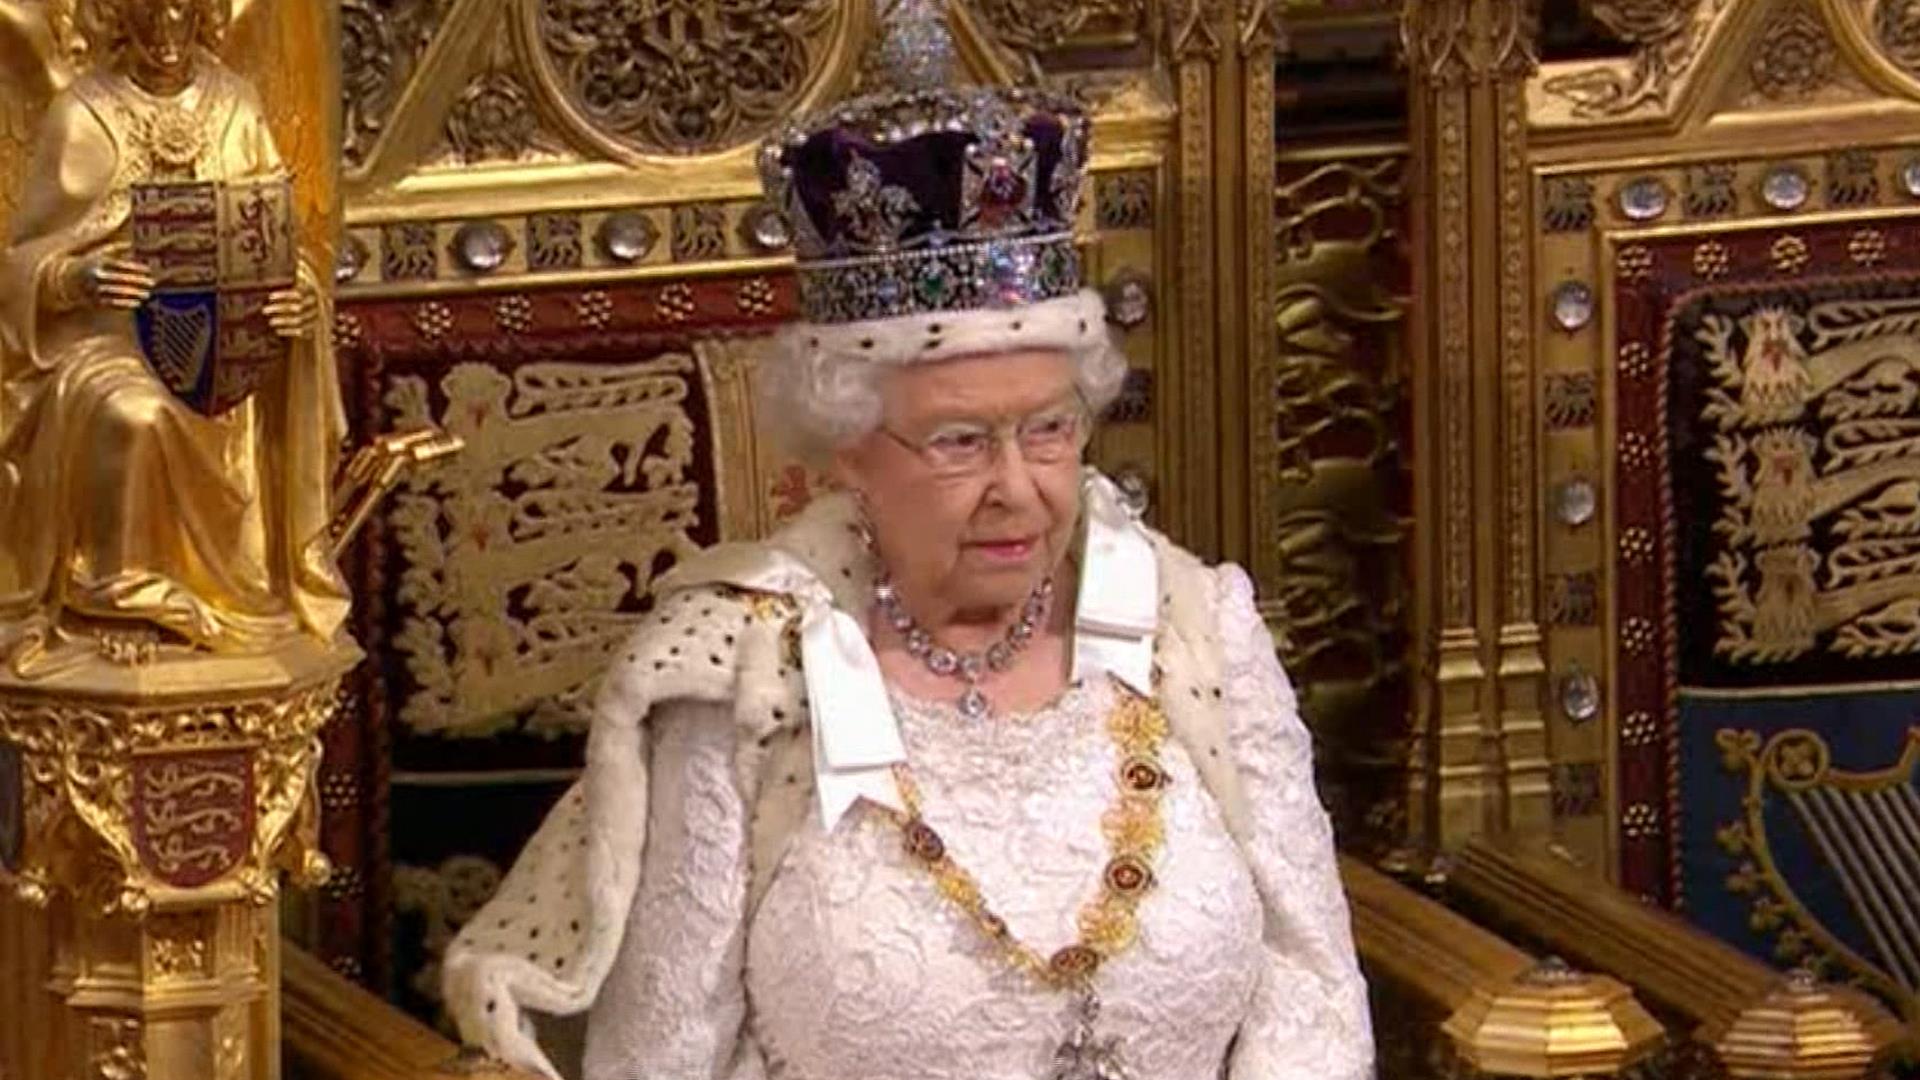 Queen Elizabeth celebrates her 90th birthday (again) - TODAY.com1920 x 1080